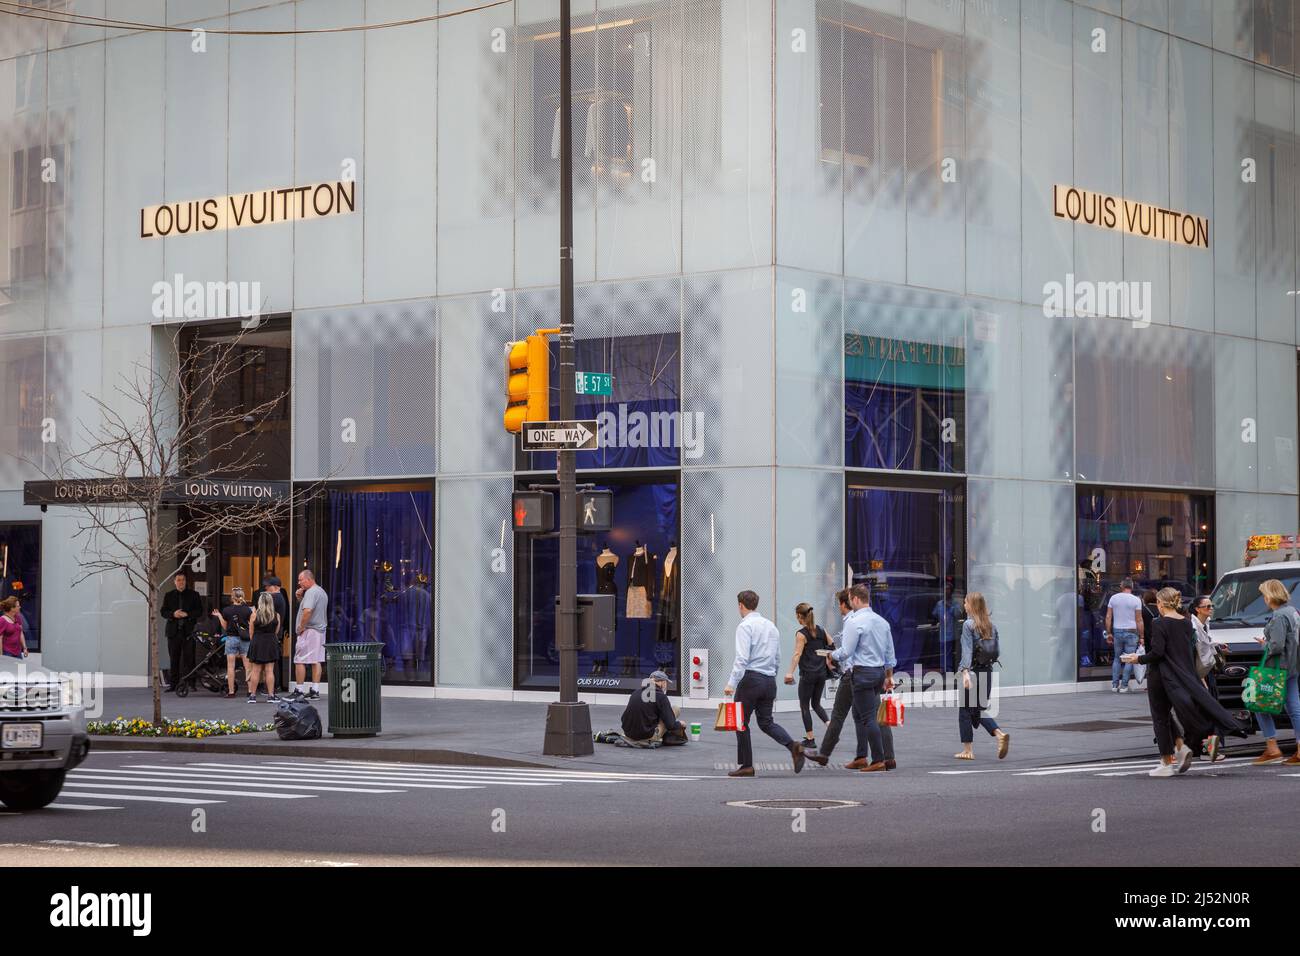 Louis Vuitton, French luxury fashion house, Fifth Avenue, New York, NY, USA. Stock Photo